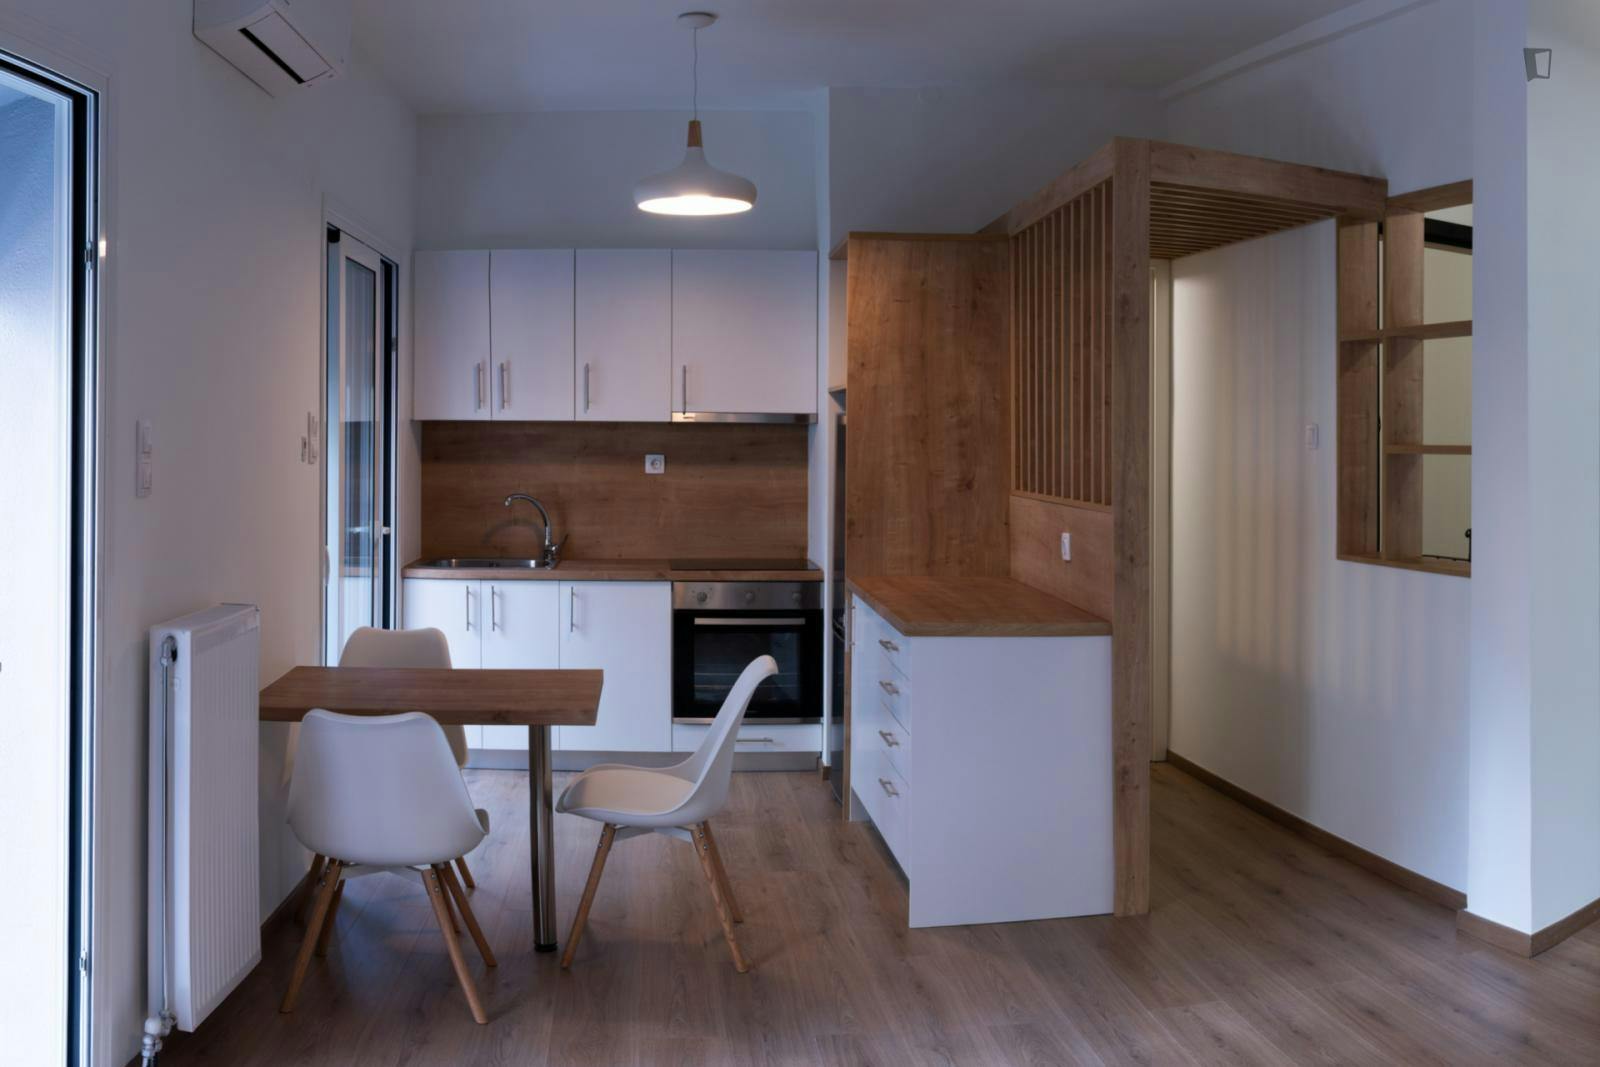 Welcoming 1-bedroom flat in Volos city center